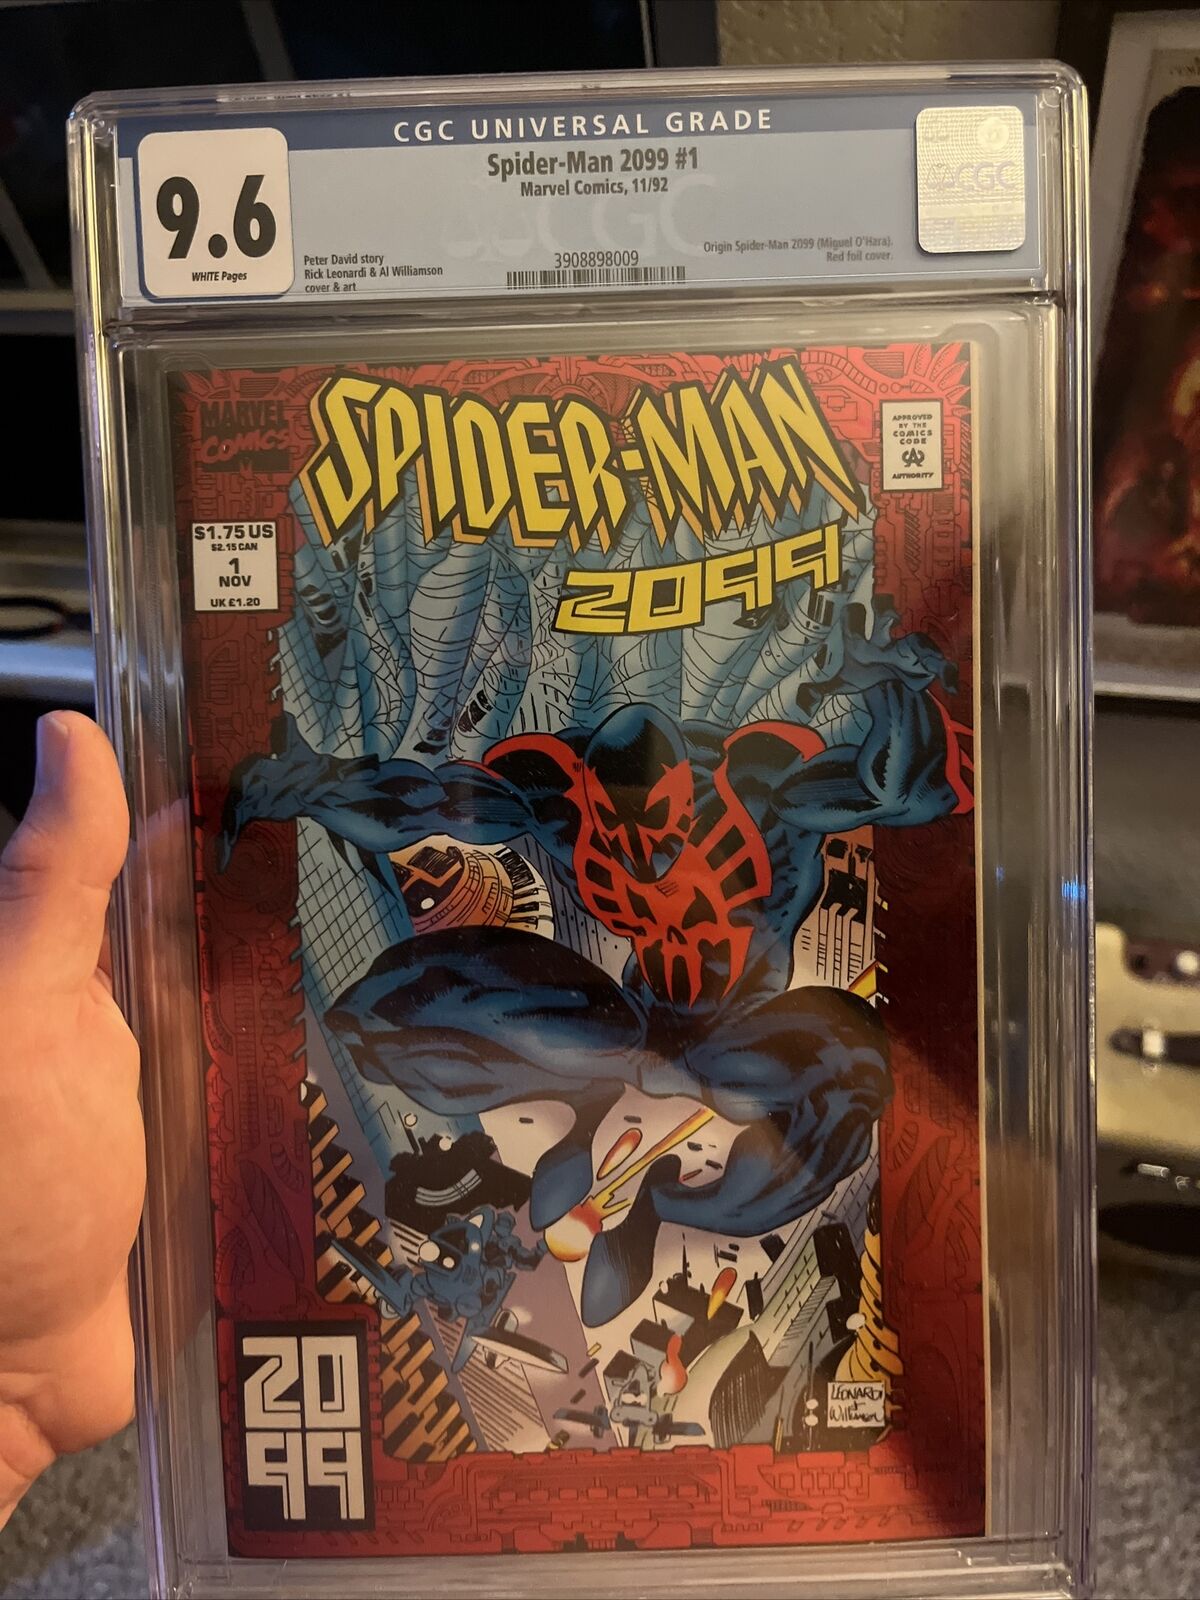 Spider-Man 2099 #1 (Marvel Comics November 1992)